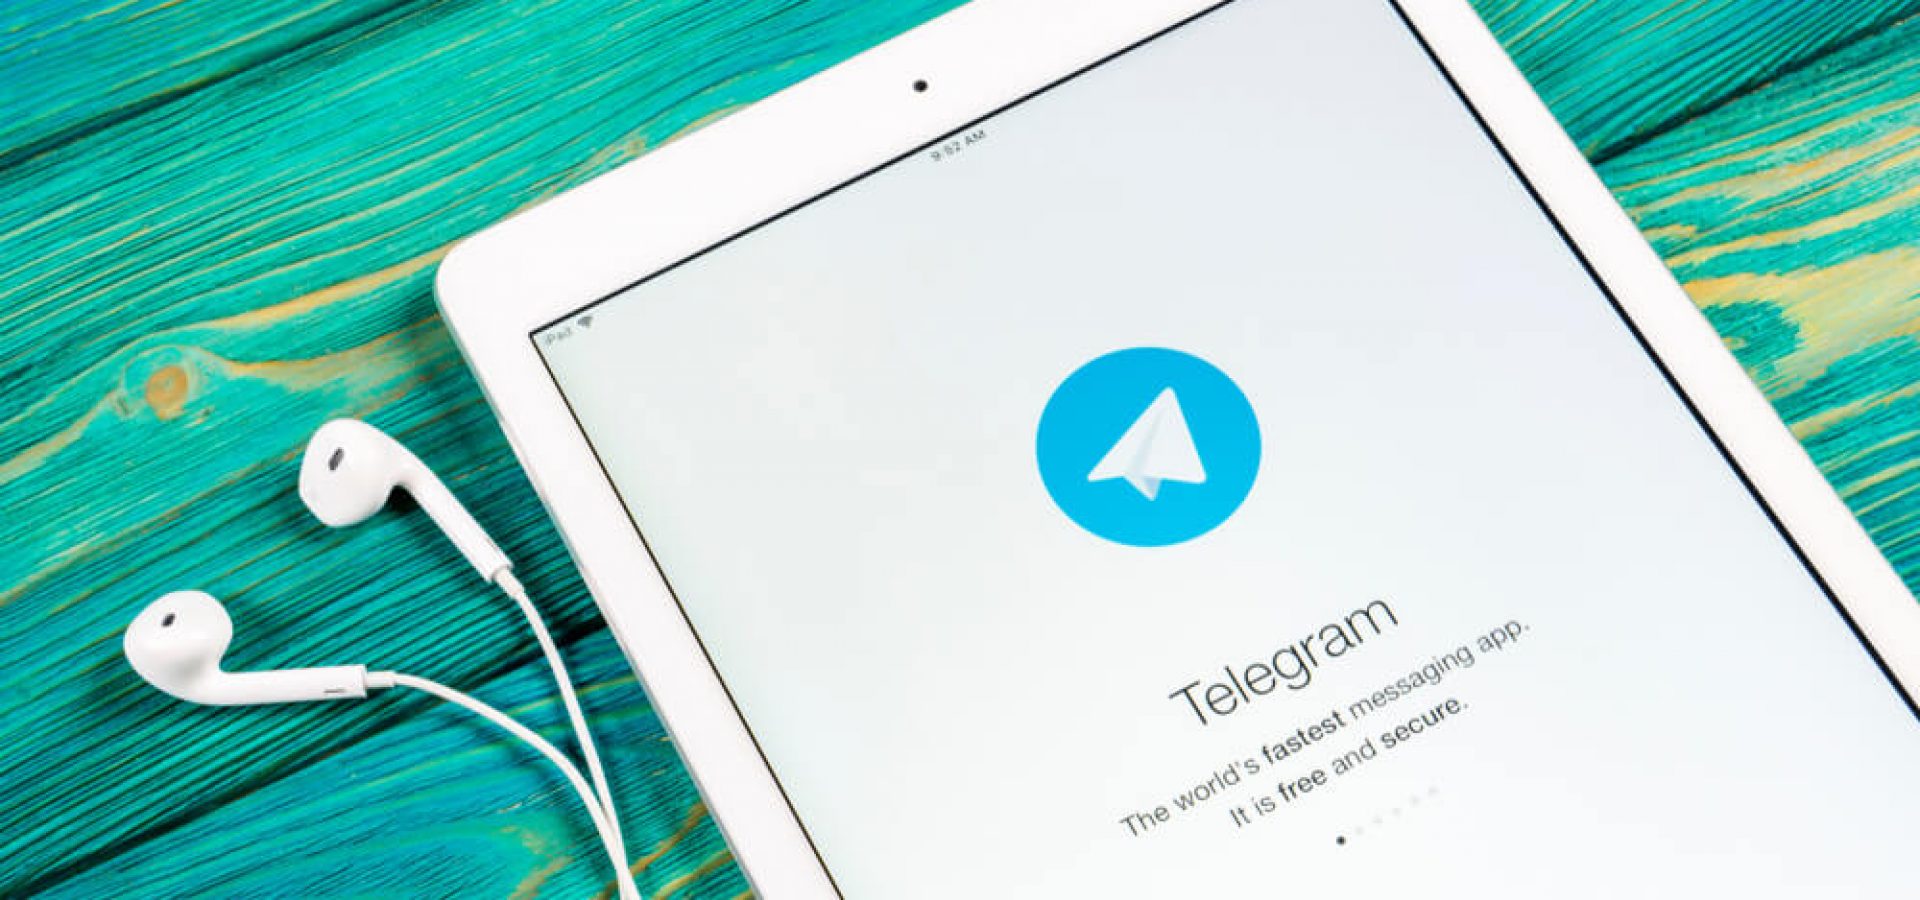 Telegram and a U.S. court